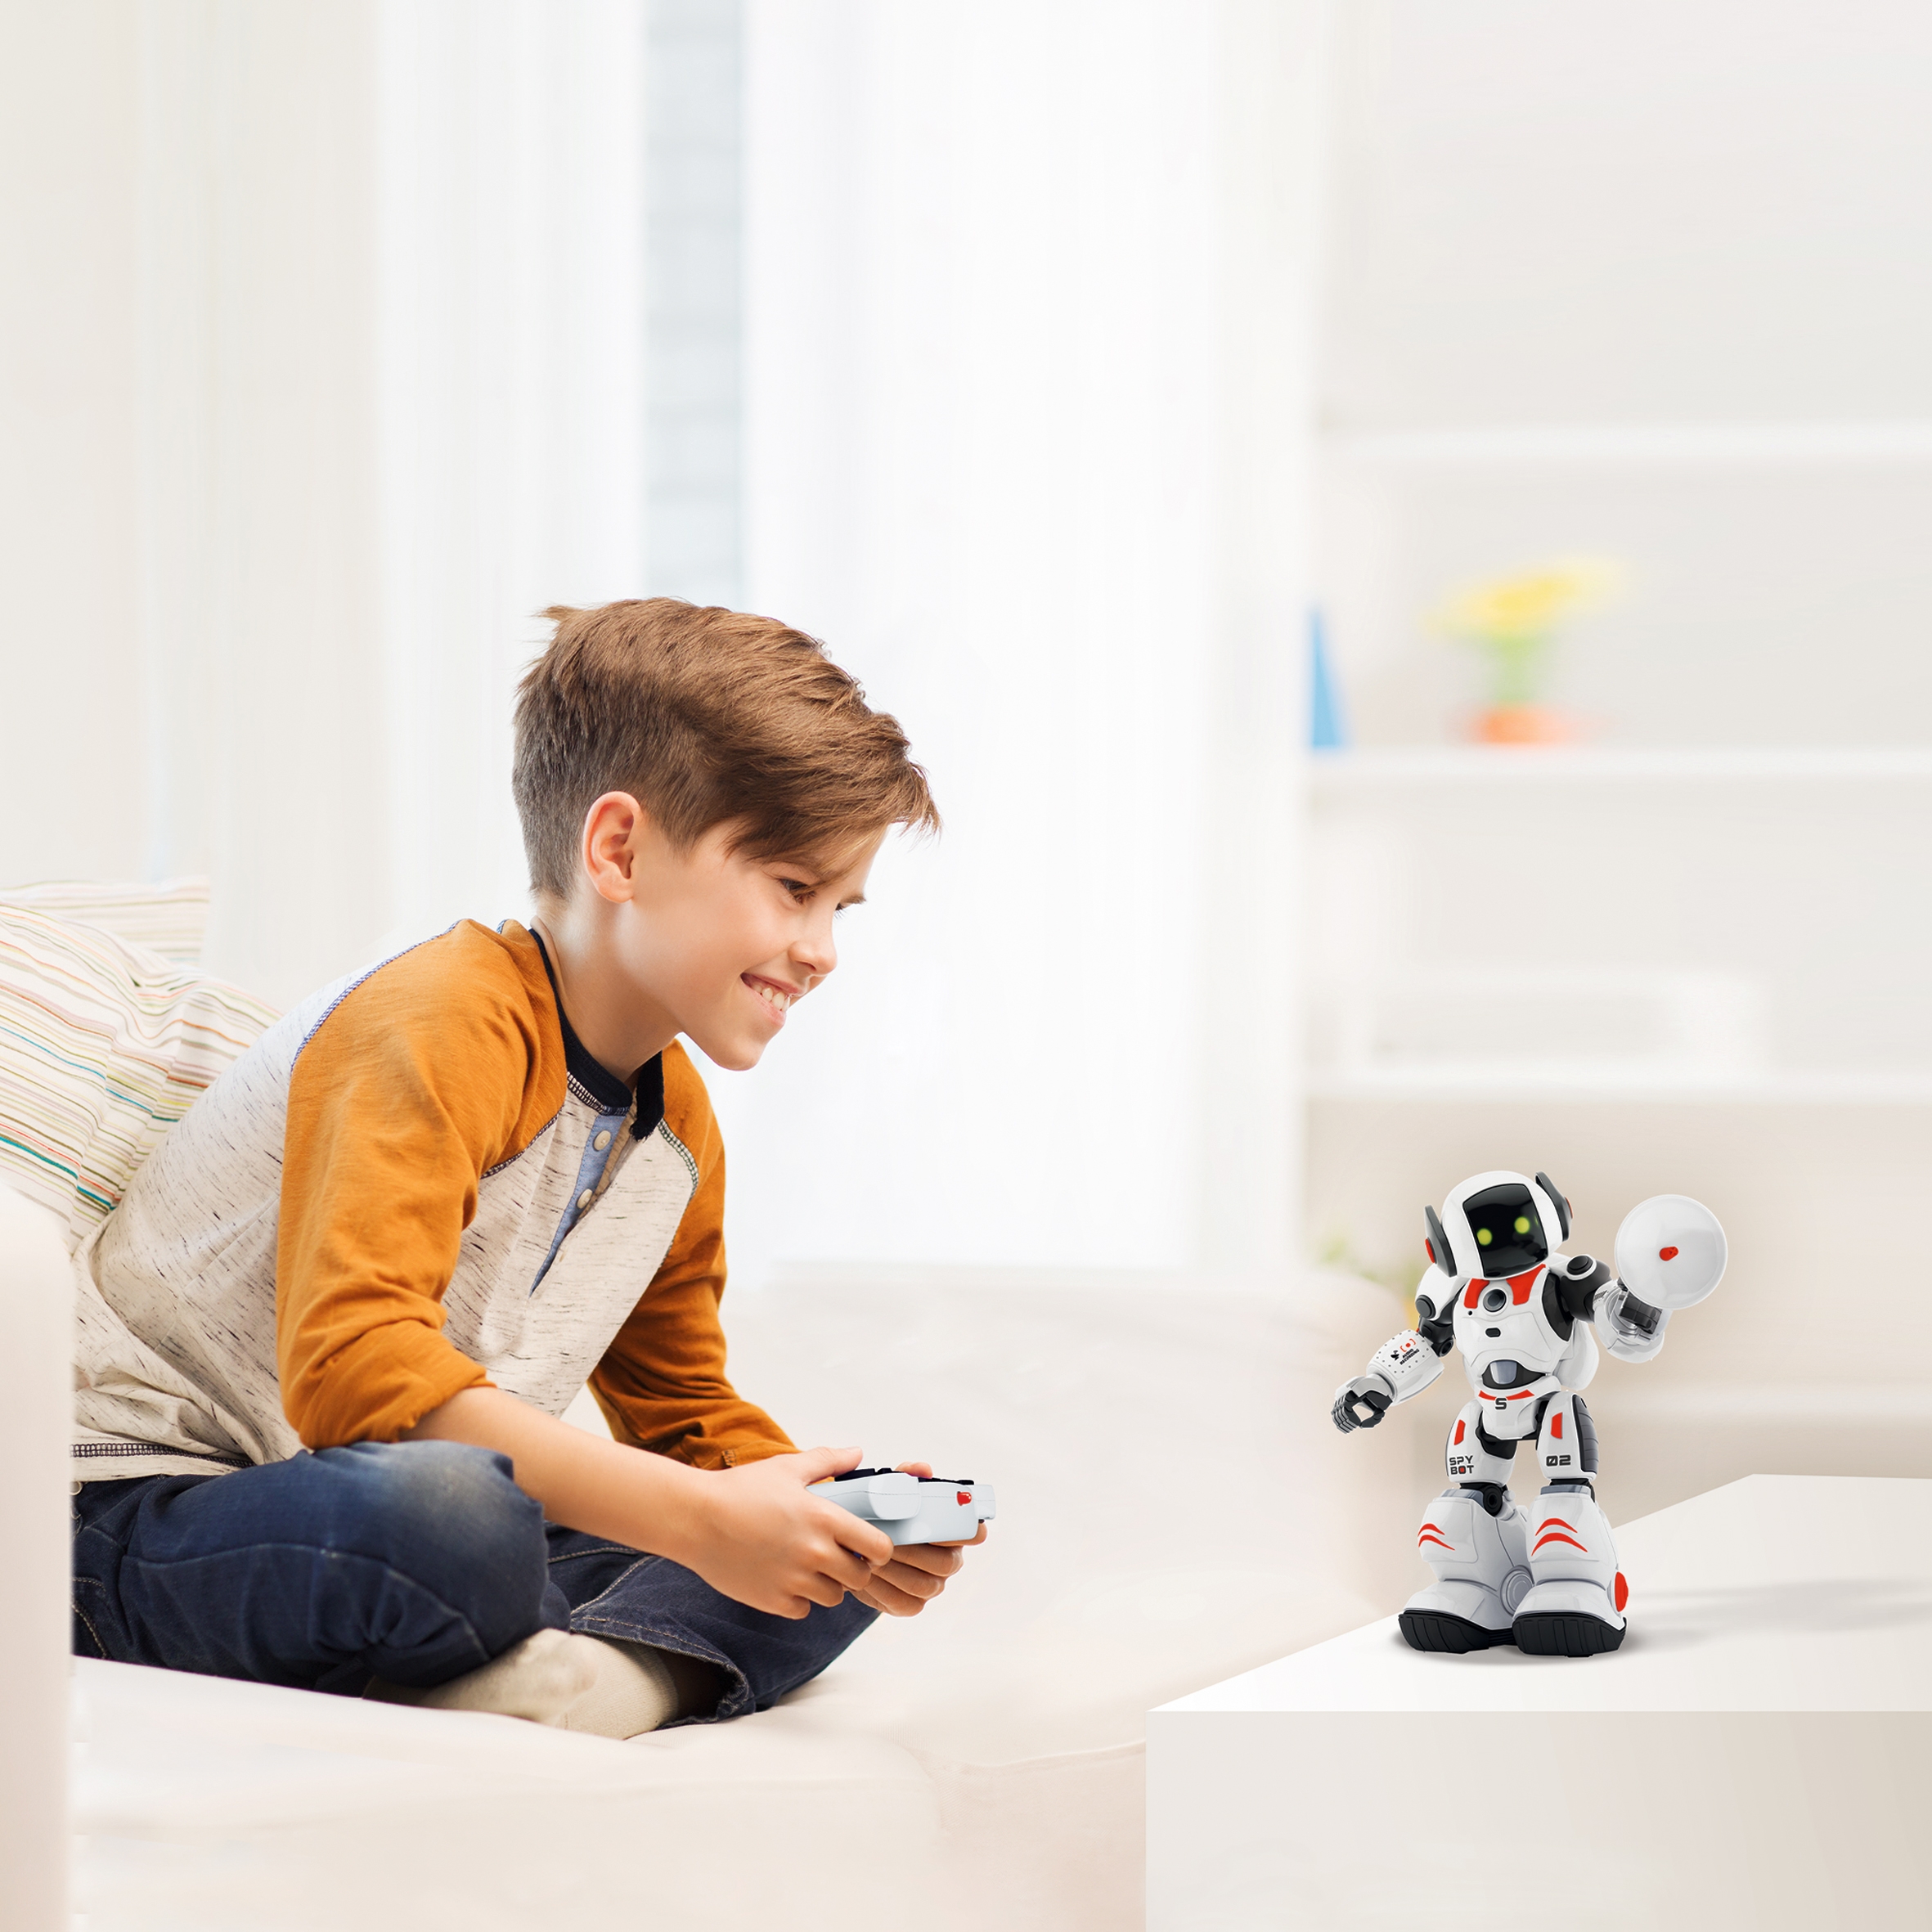 XTREM BOTS – robot interaktywny - James the Spy Bot (3803157)